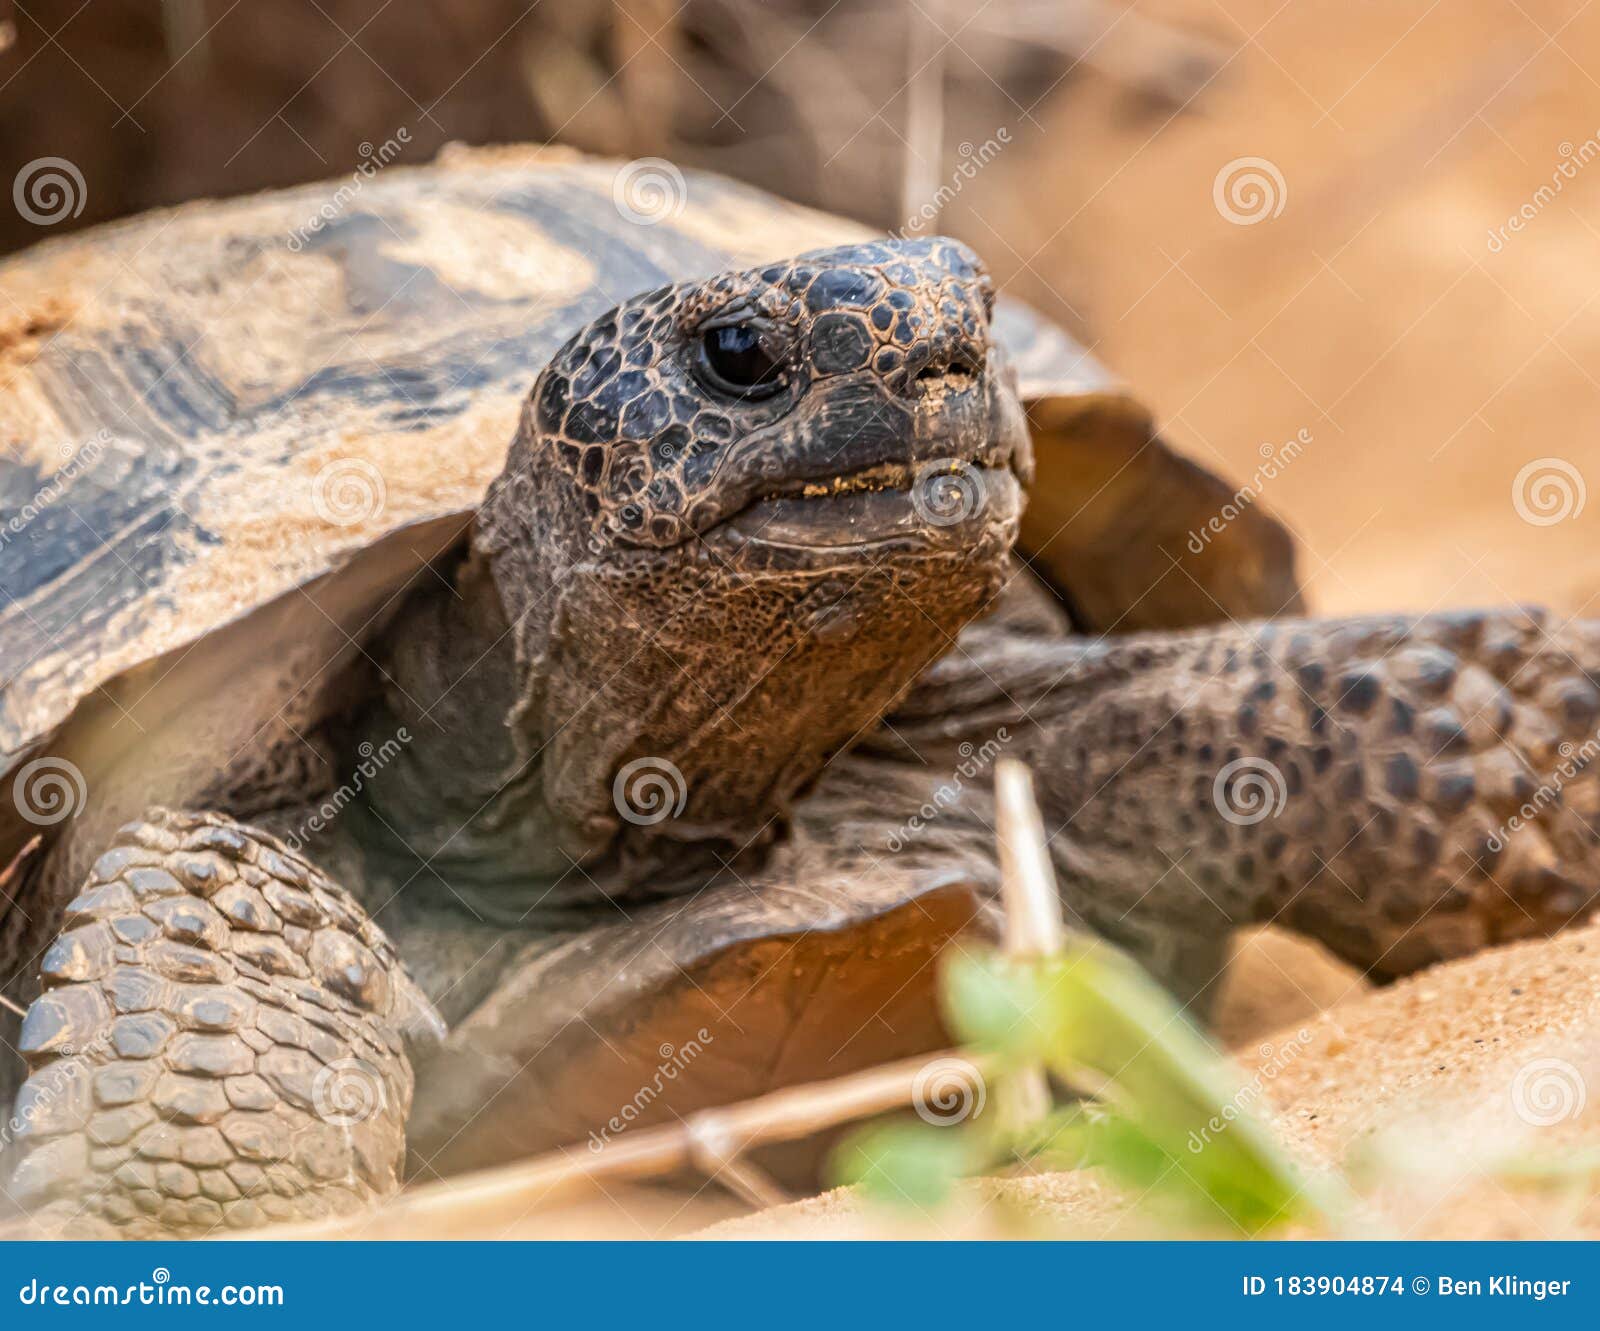 the threatened florida gopher tortoise